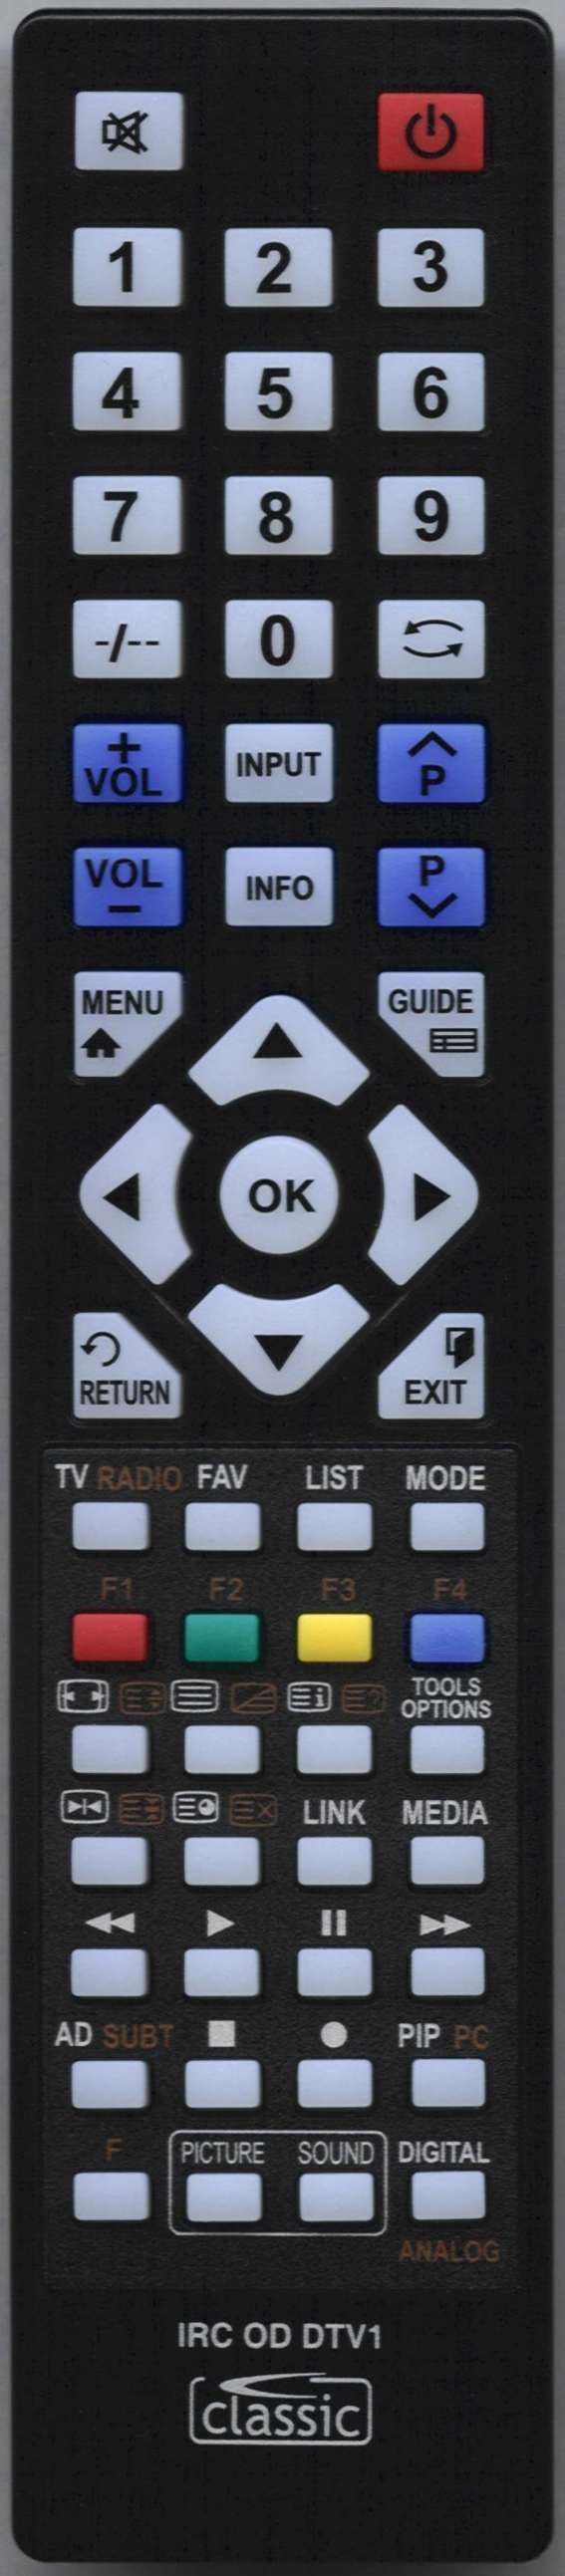 PANASONIC TX24CK1 Remote Control